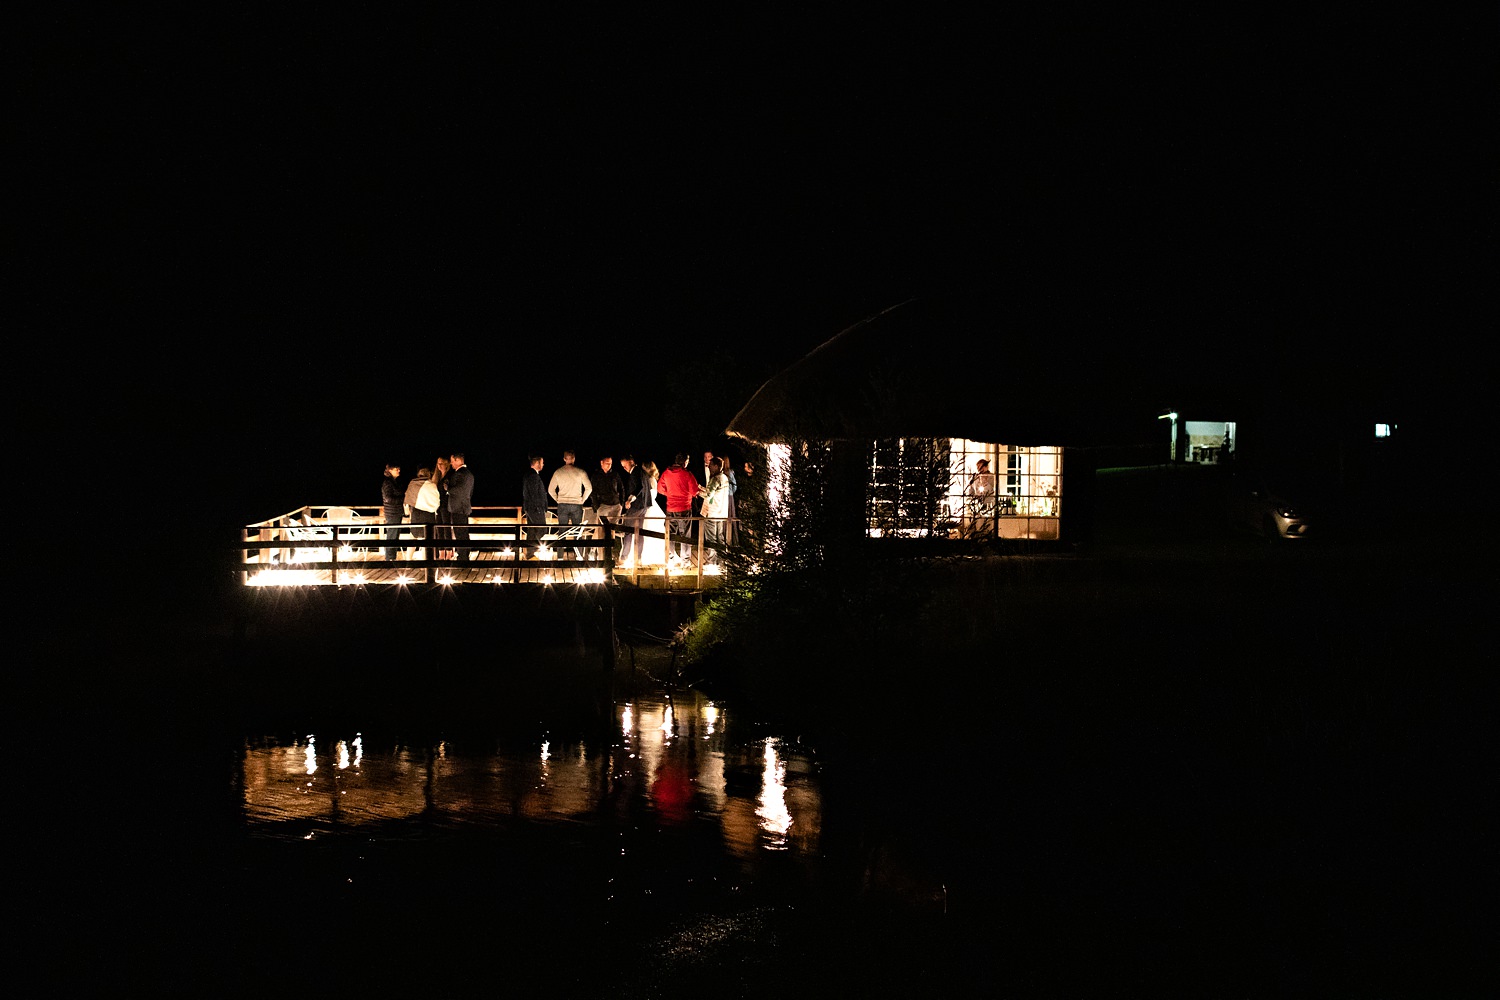 Drakensberg wedding venue St Bernards Lake lit up at night.